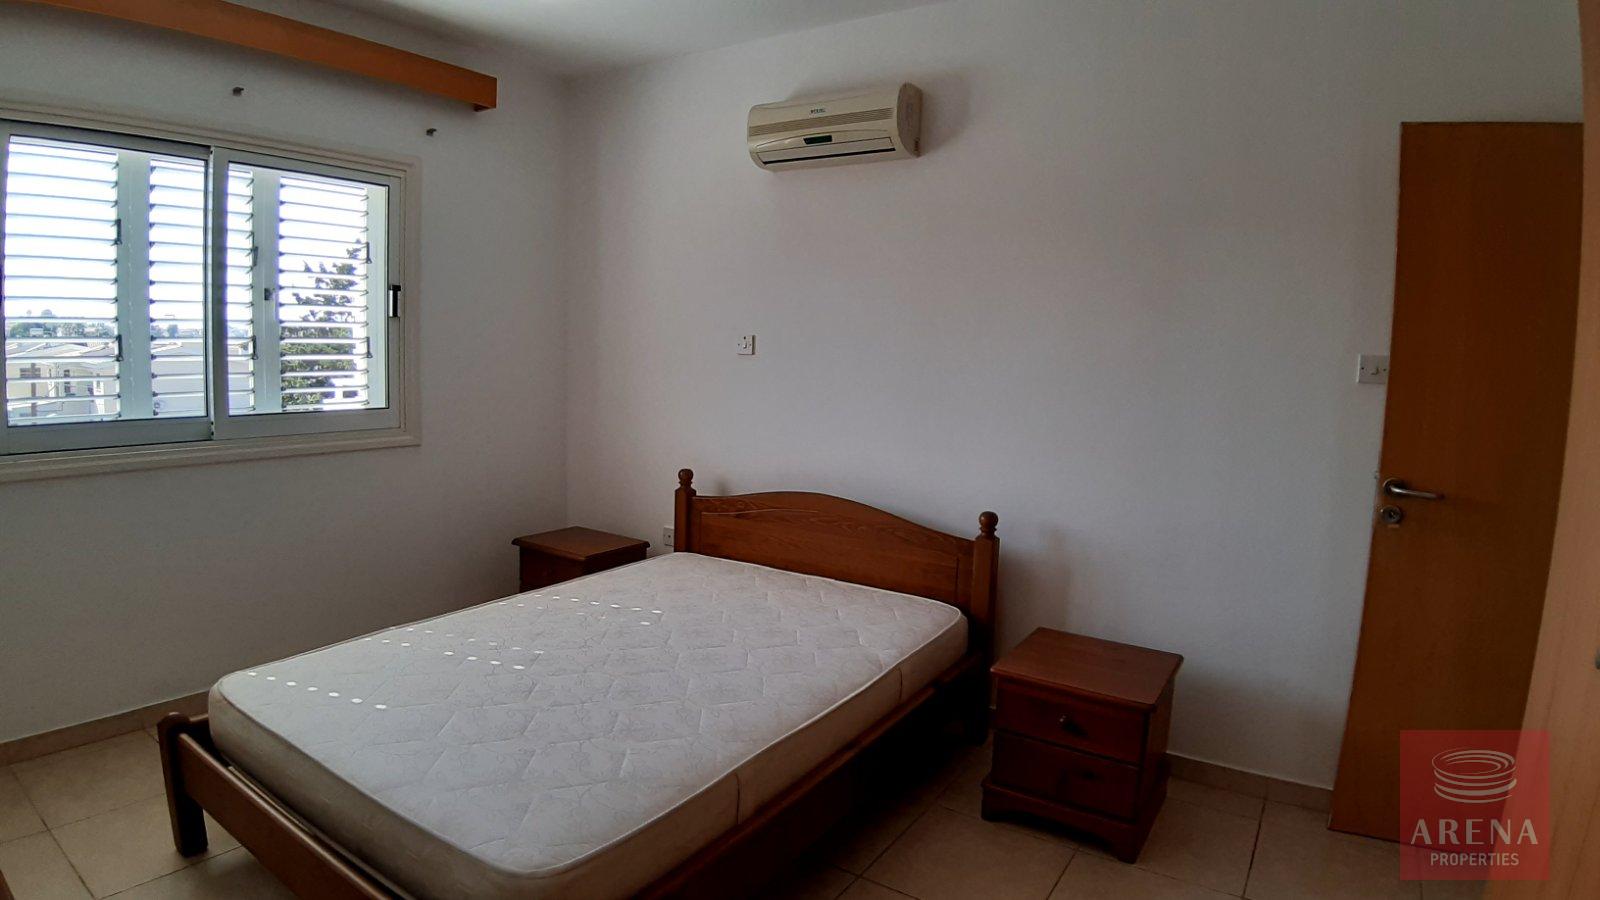 Apt for rent in Paralimni - bedroom